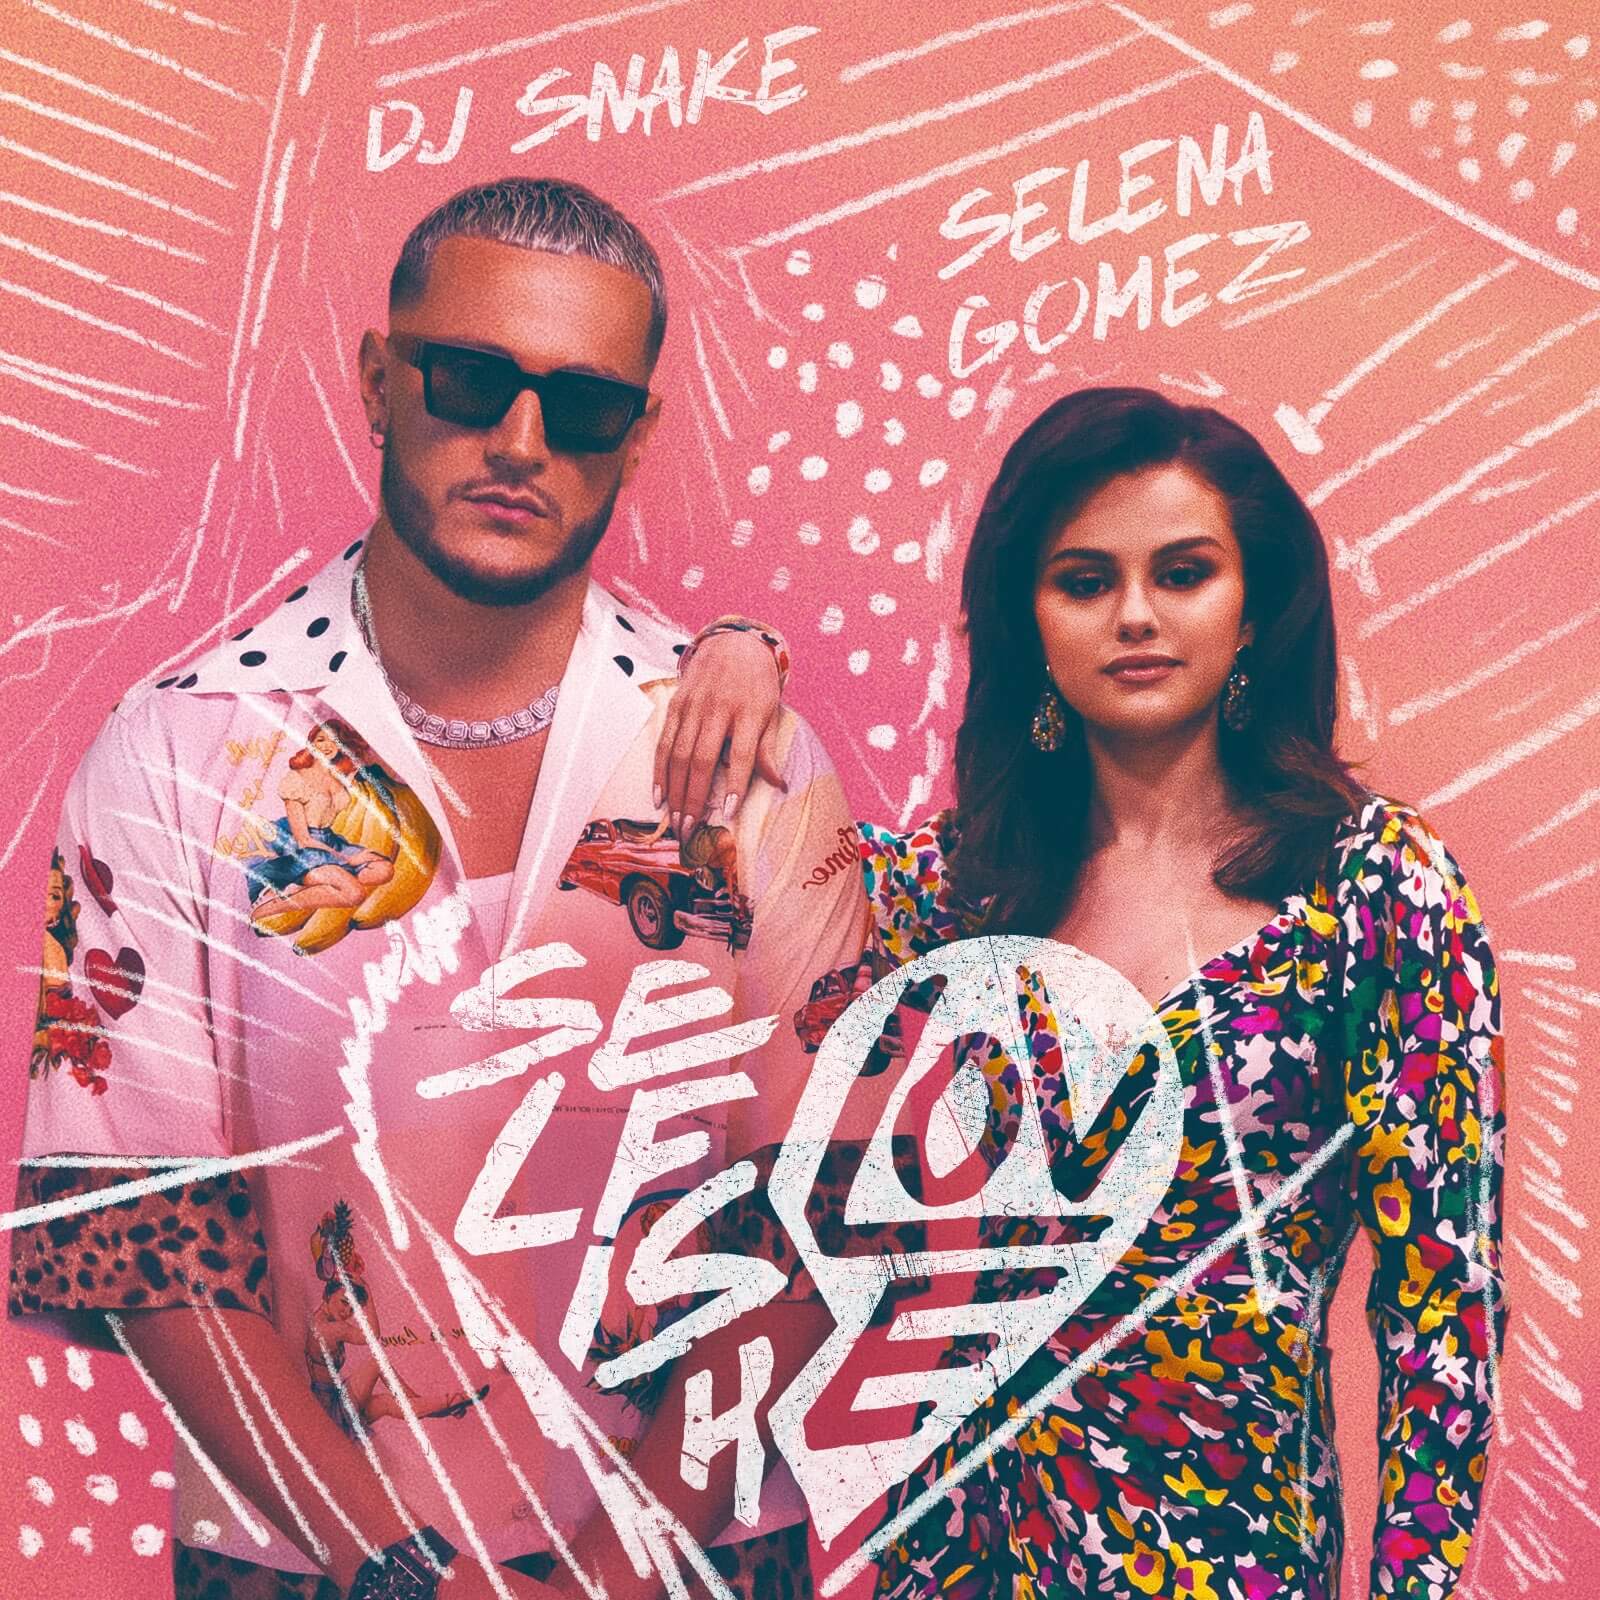 DJ Snake Teases a ‘Selfish’ New Collab With Selena Gomez